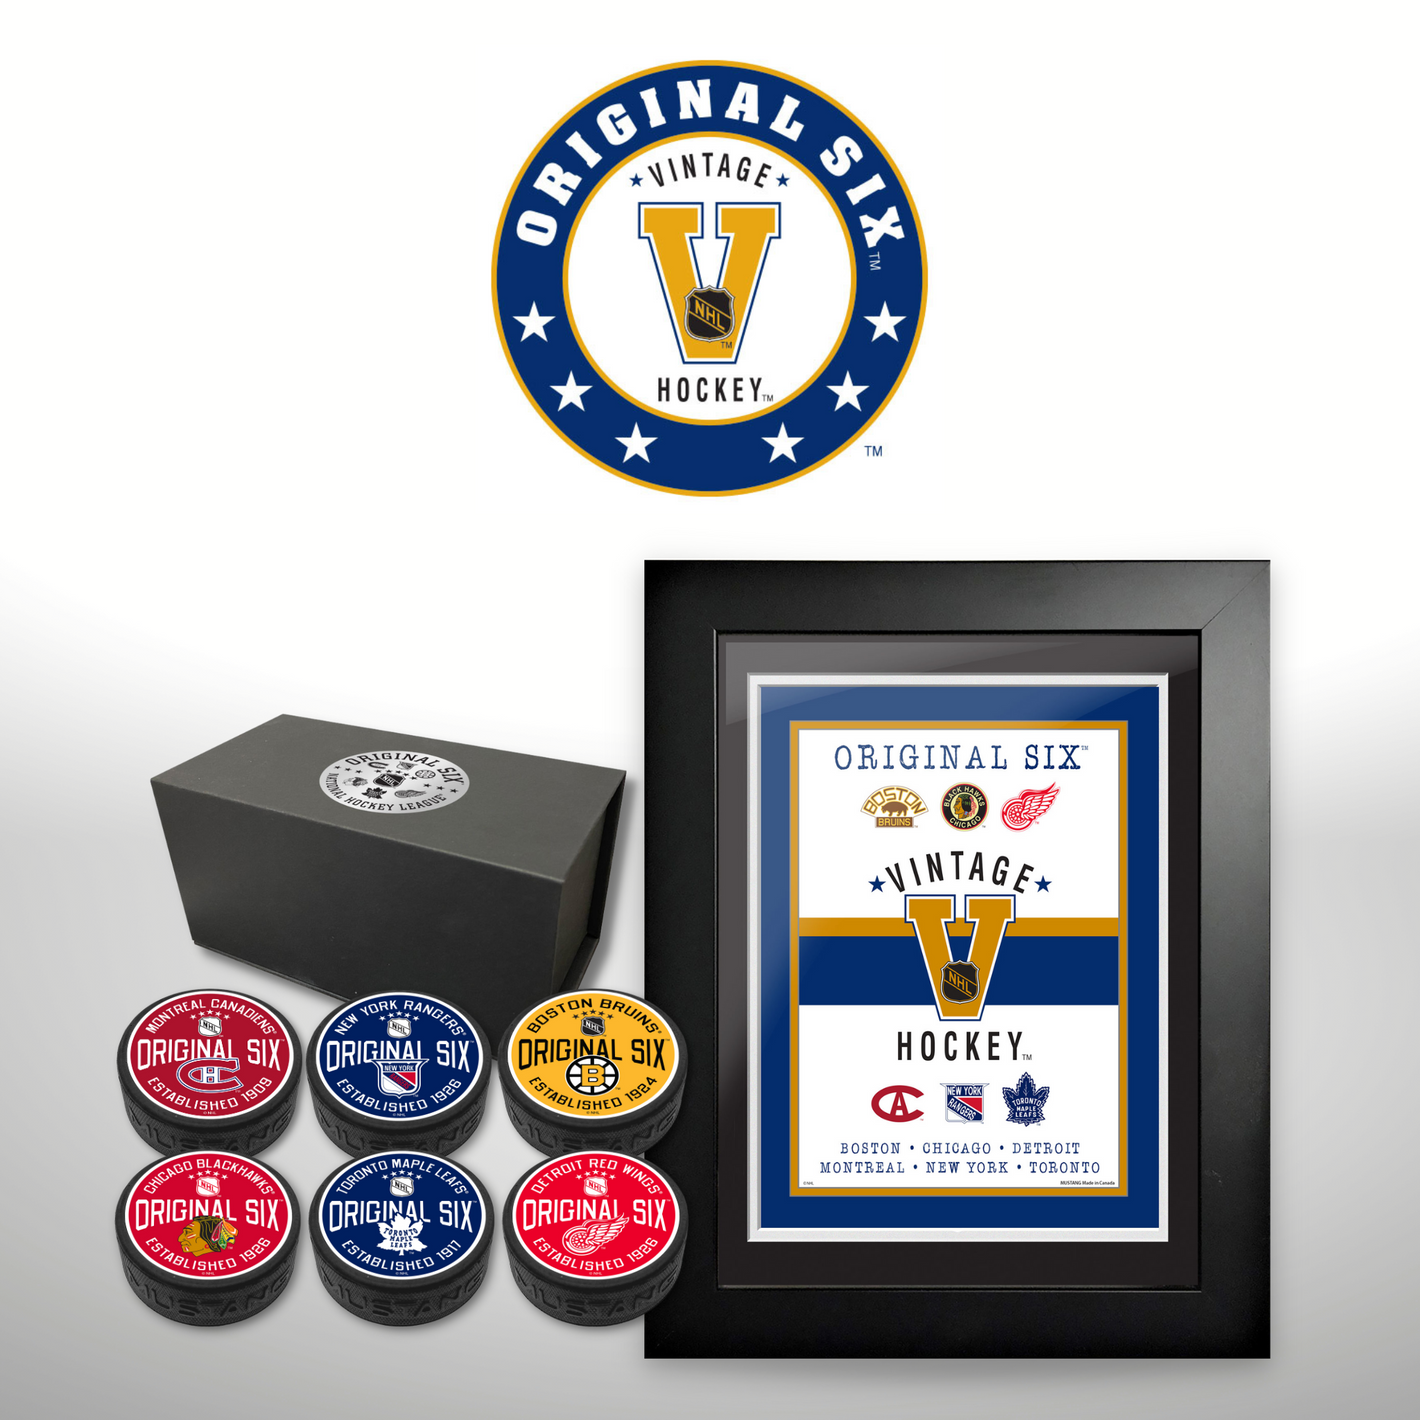 Columbus Blue Jackets Merchandise – Hockey Hall of Fame